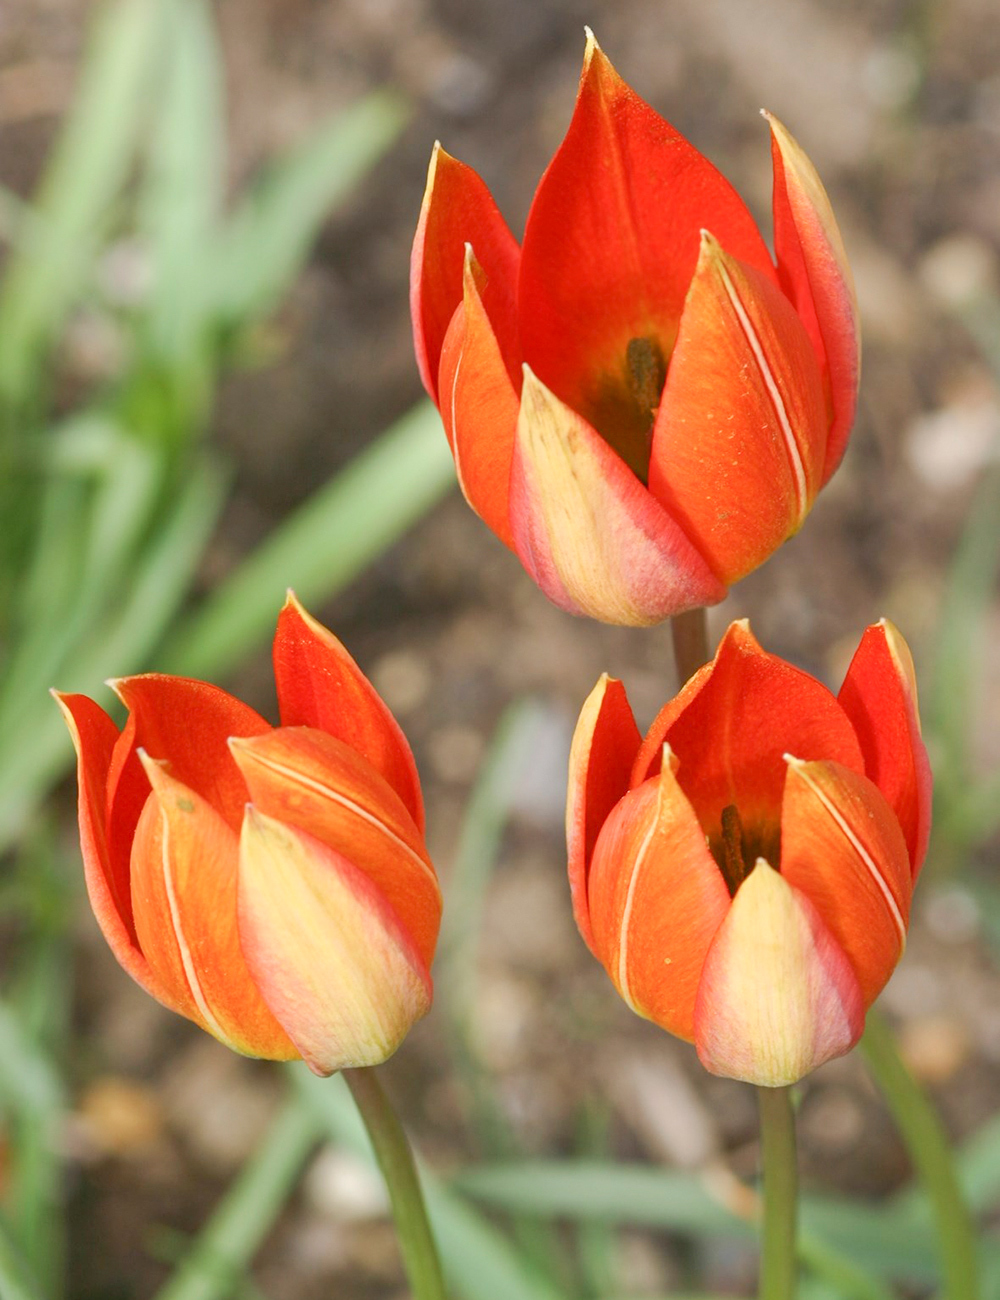 Species Tulip 'Whittallii'